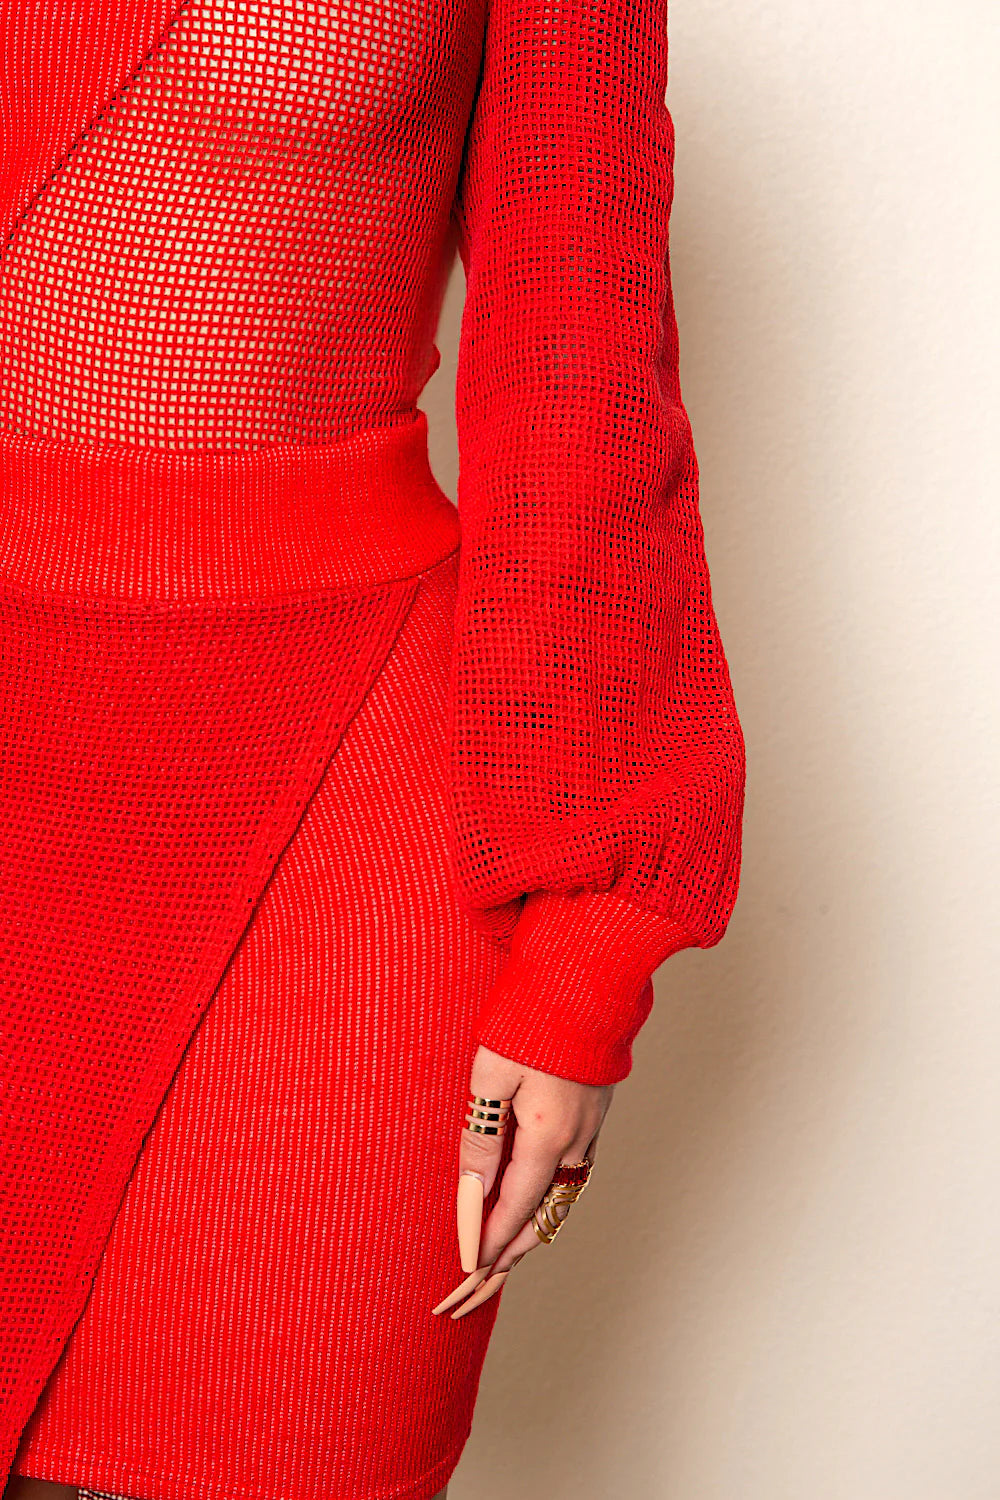 Ricki Brazil Red Knit Dress